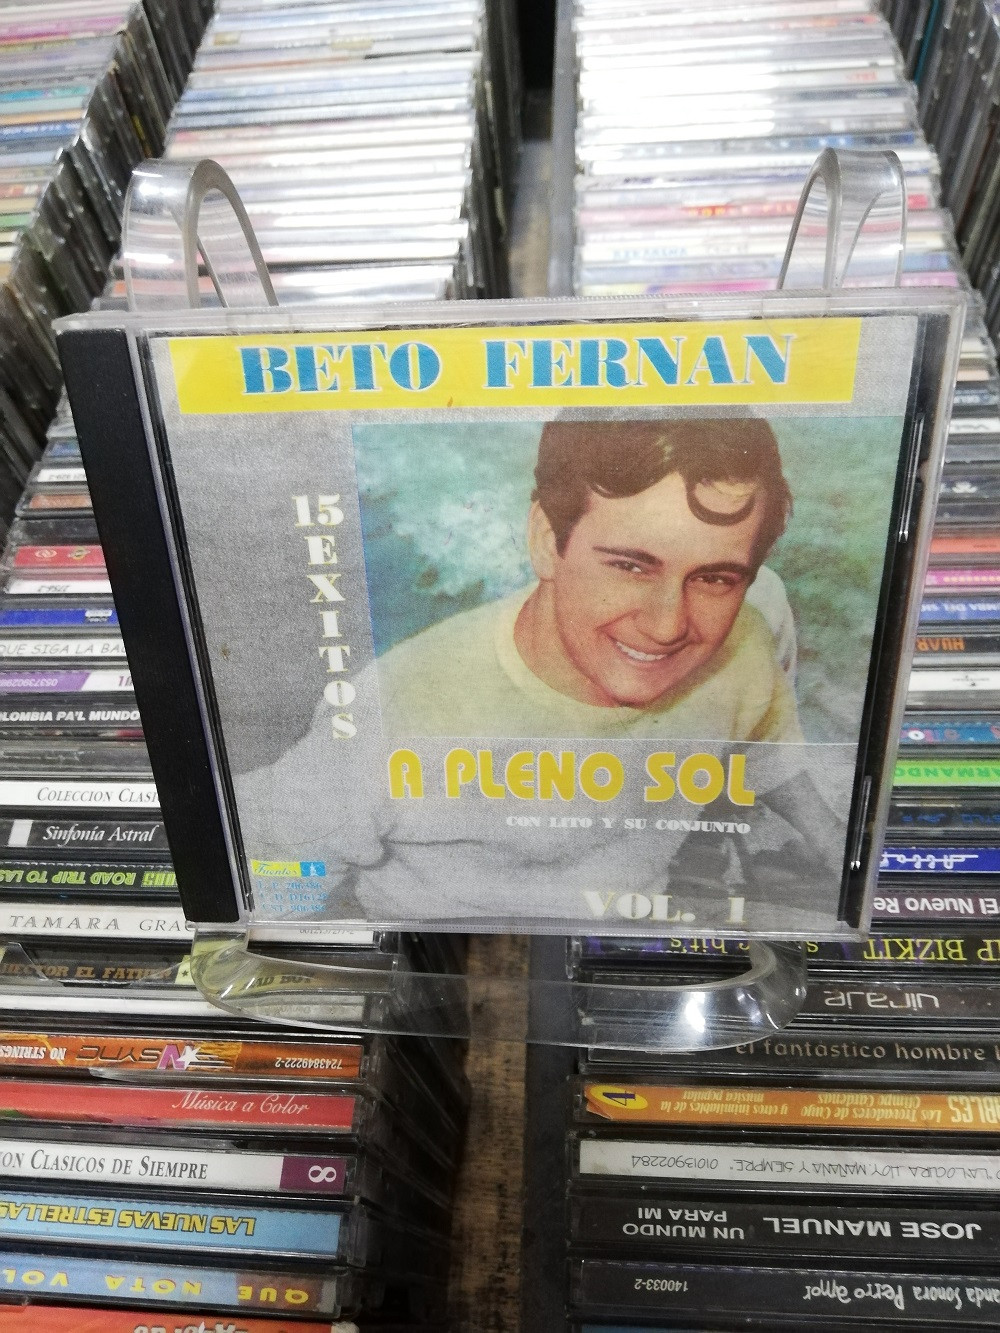 Imagen CD BETO FERNAN - A PLENO SOL VOL. 1